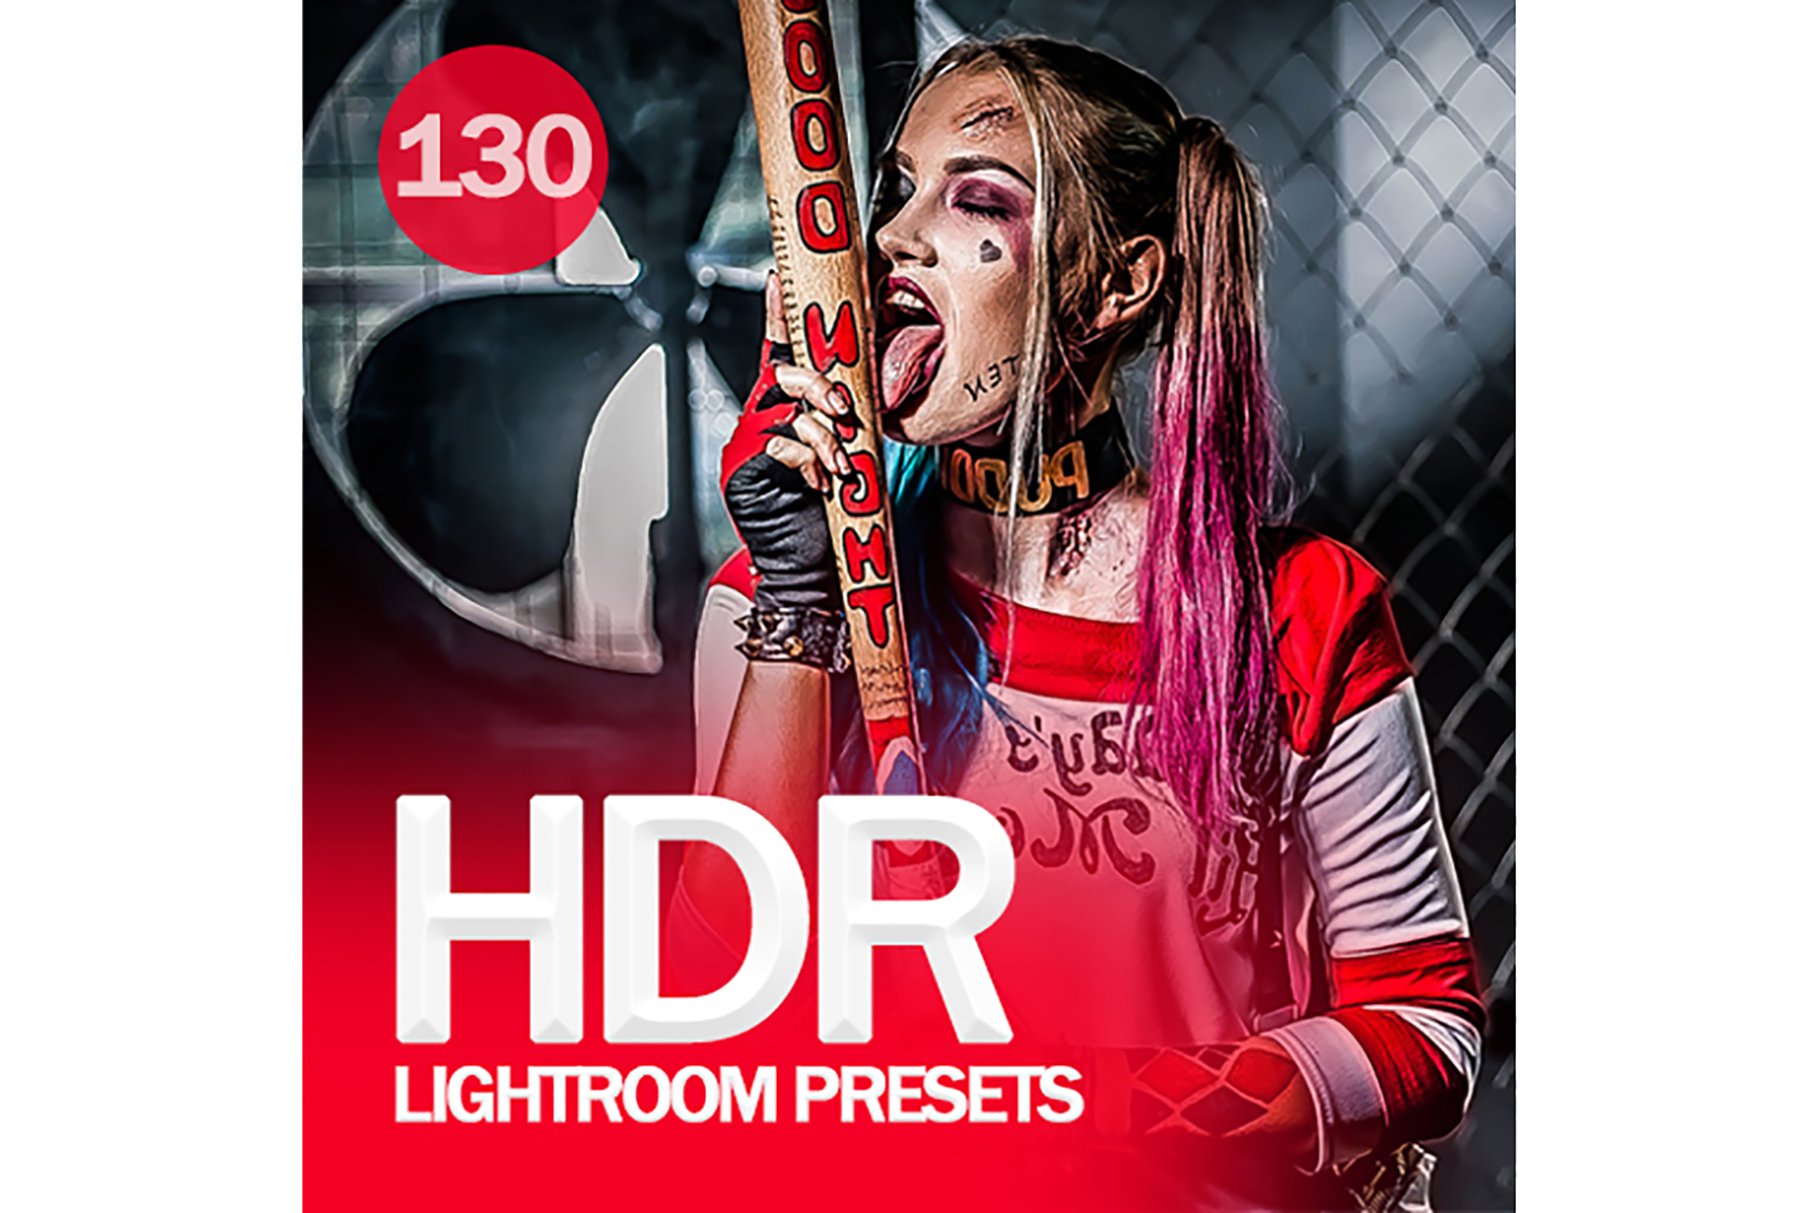 HDR Lightroom Presetscover image.